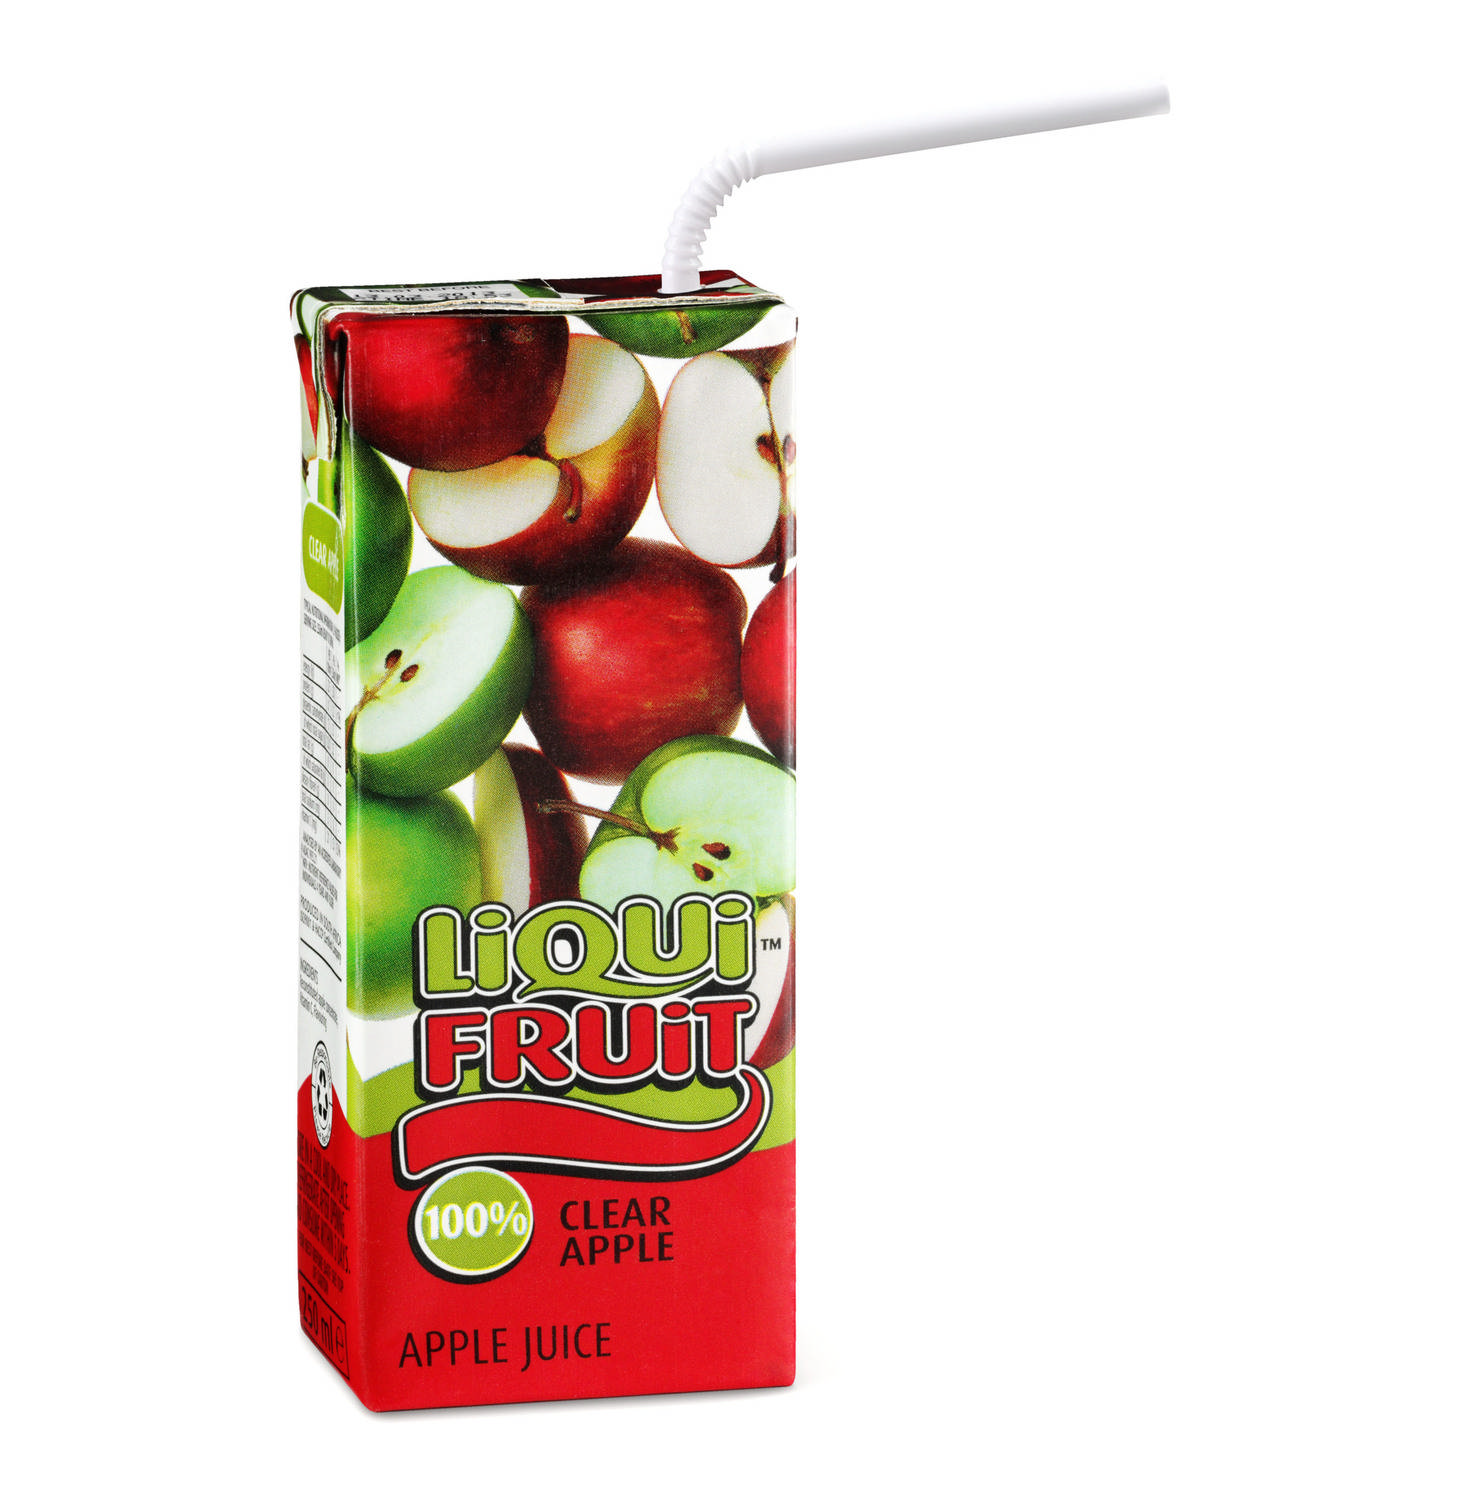 Dodgy “object” found floating in Liqui Fruit juice photo